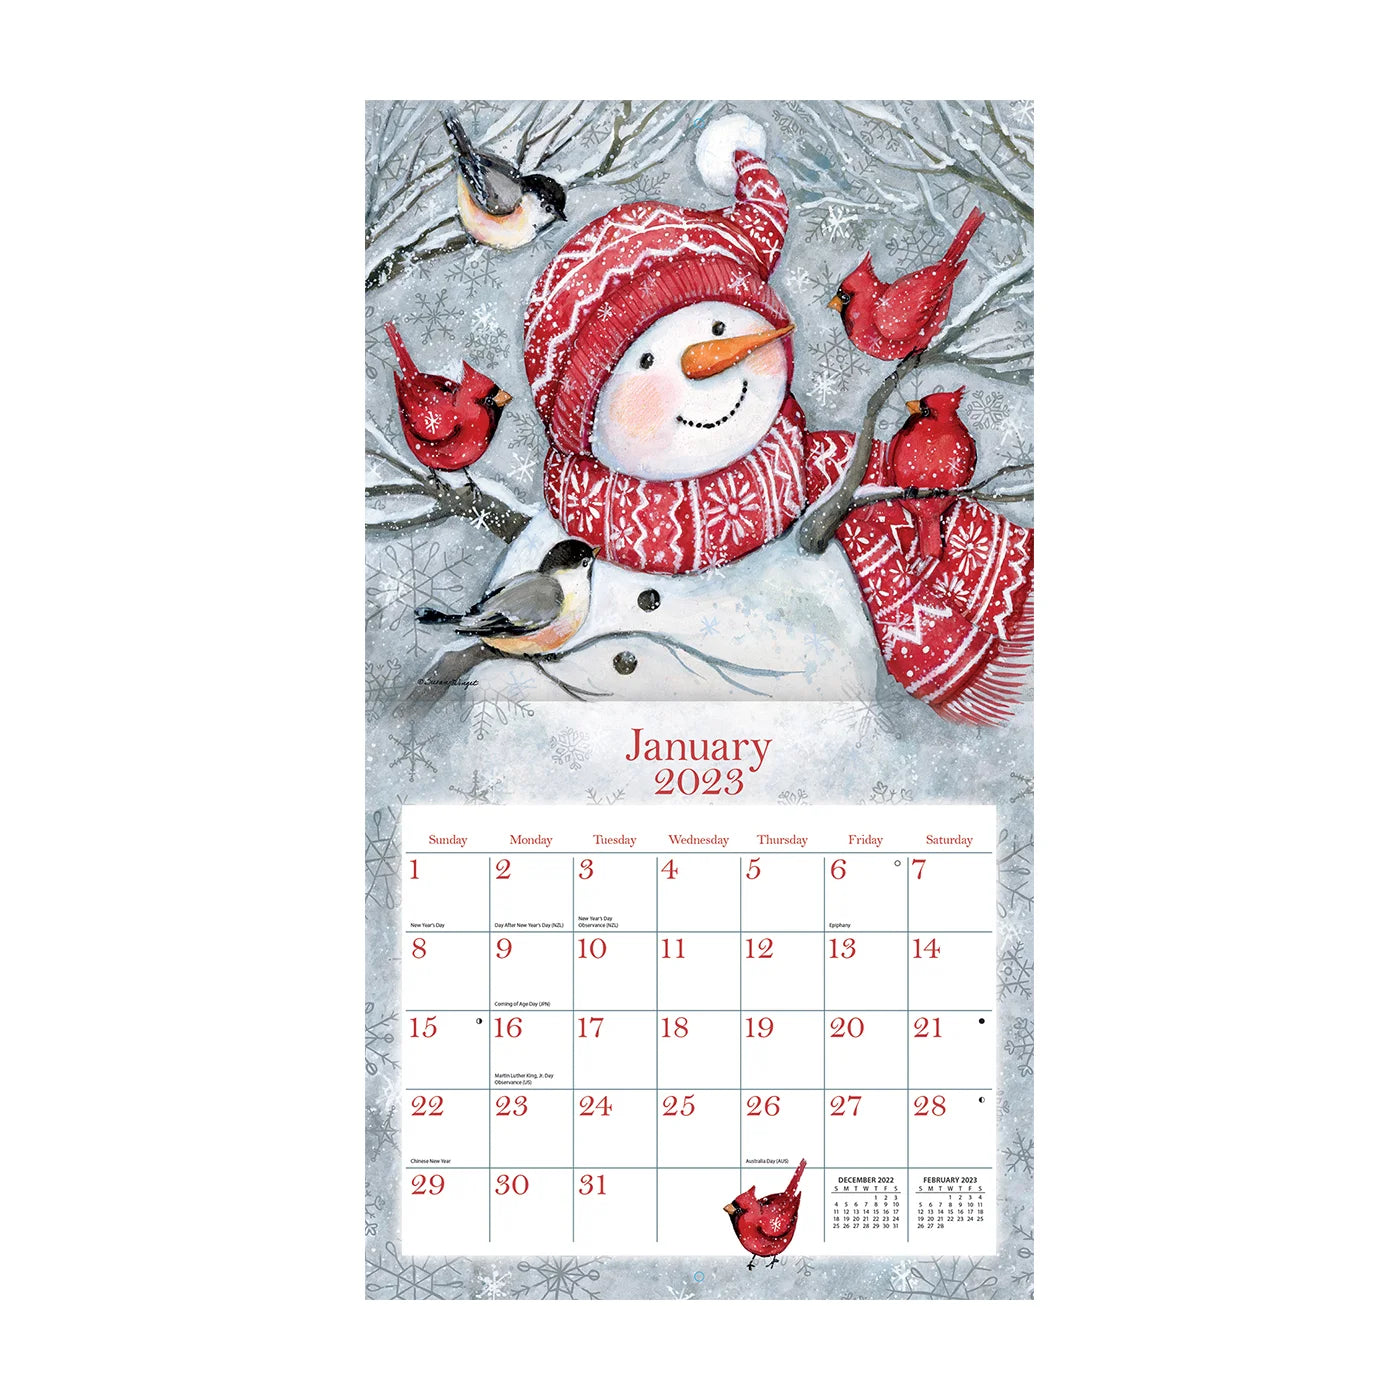 2023 LANG Sam Snowman by Susan Winget - Deluxe Wall Calendar